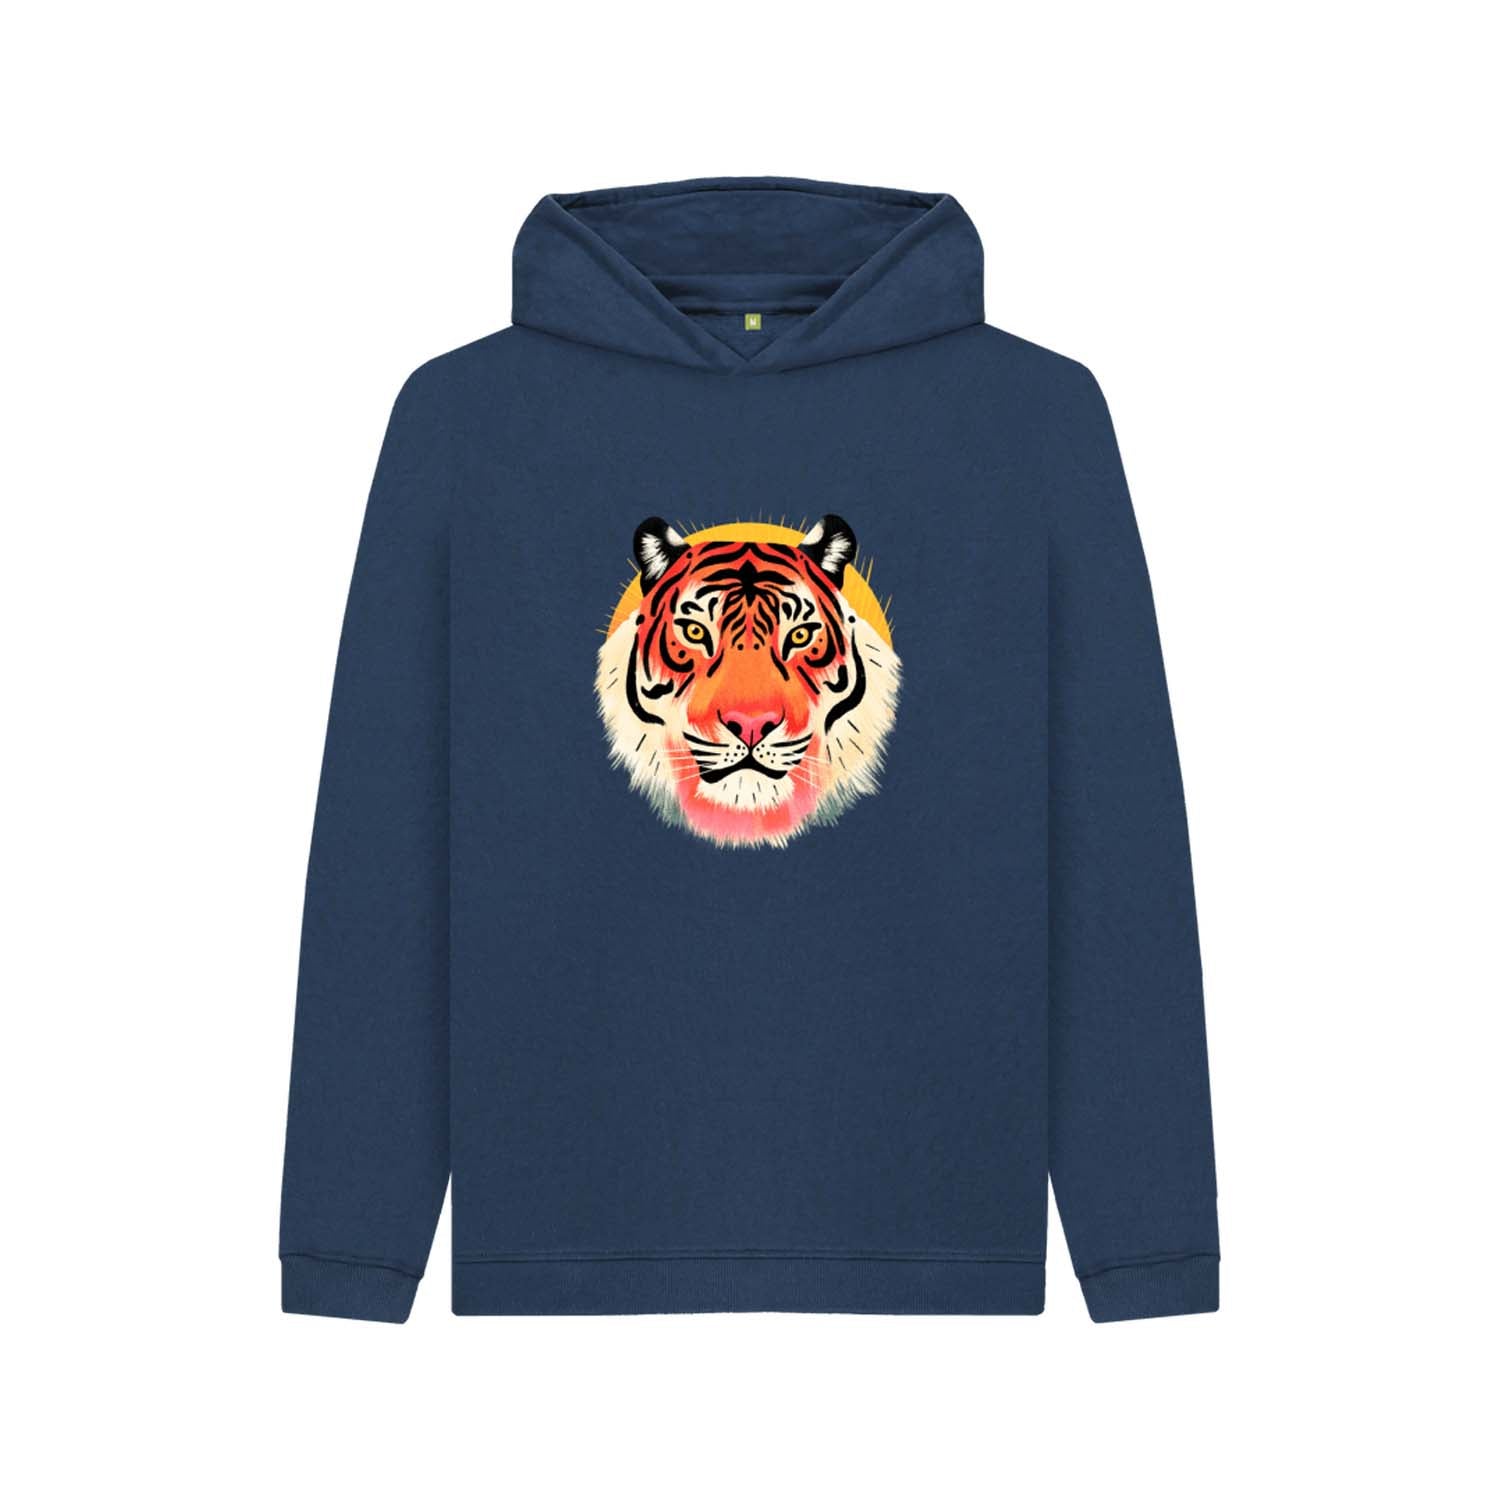 Children's Navy ZSL Tiger Hoodie - Tiger Print Top